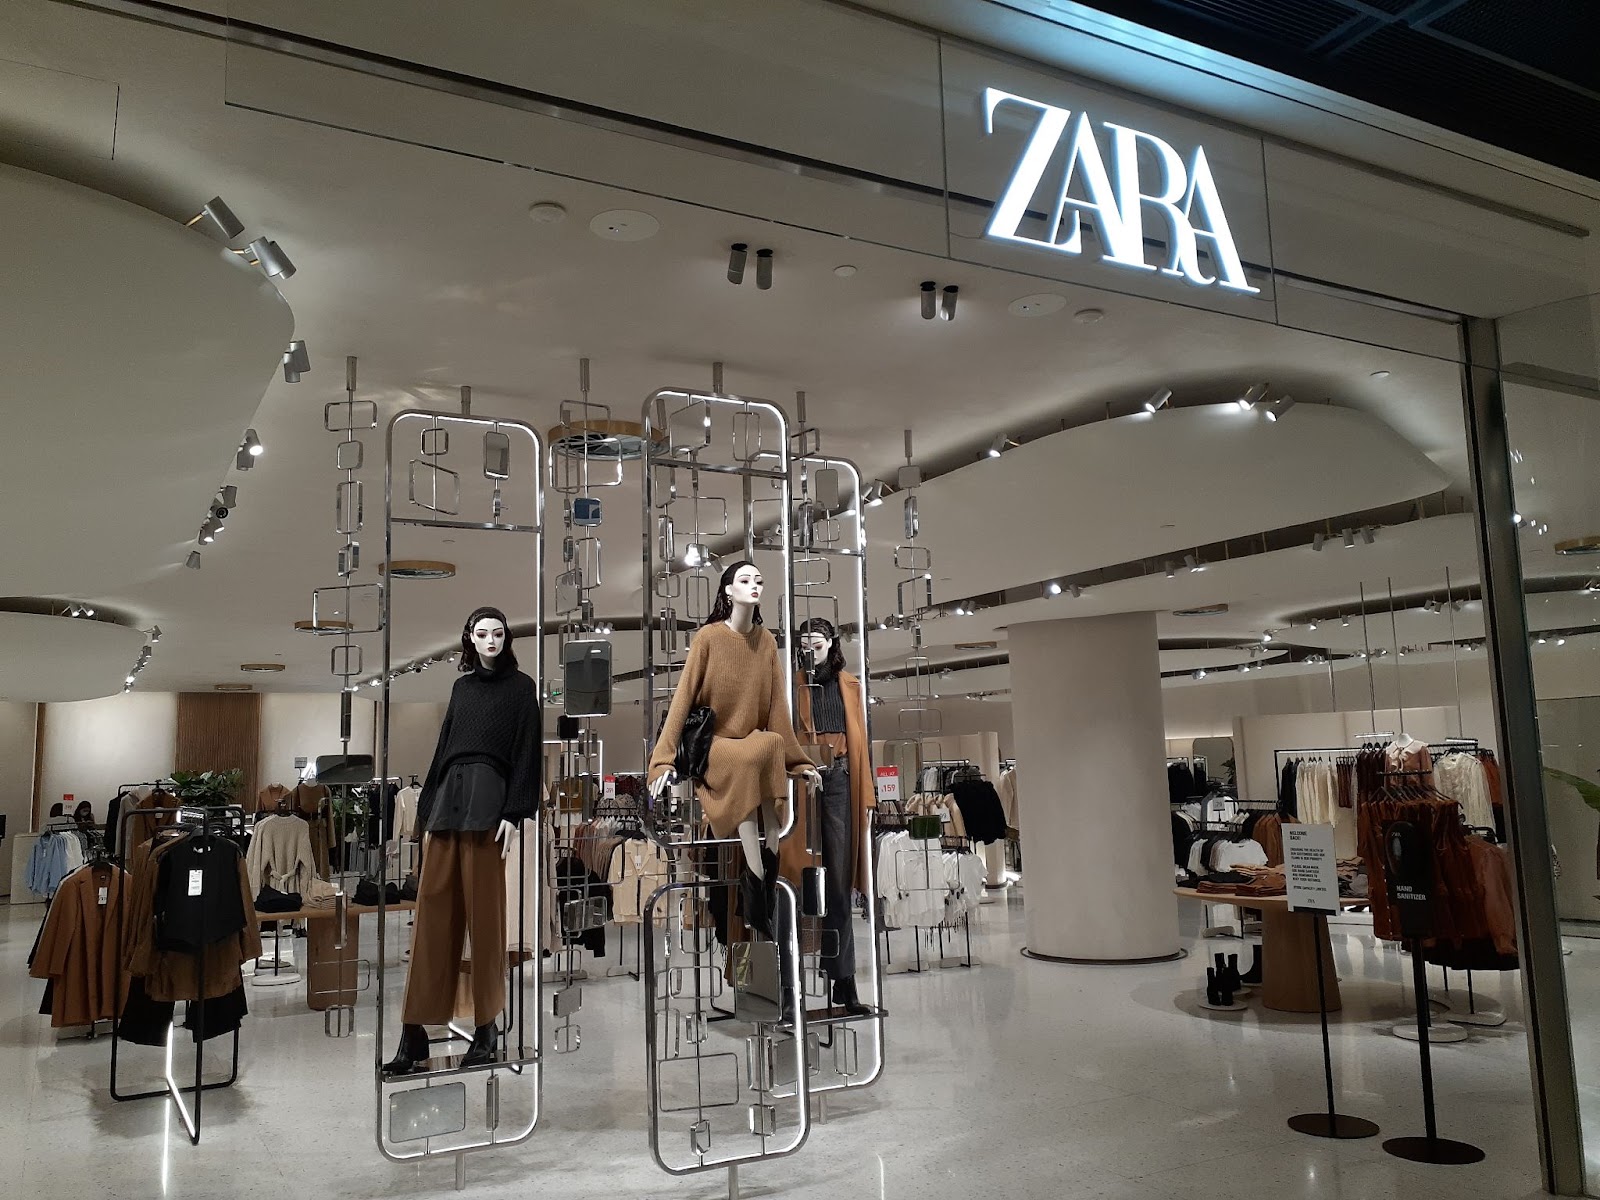 All About the Zara Influencer Program